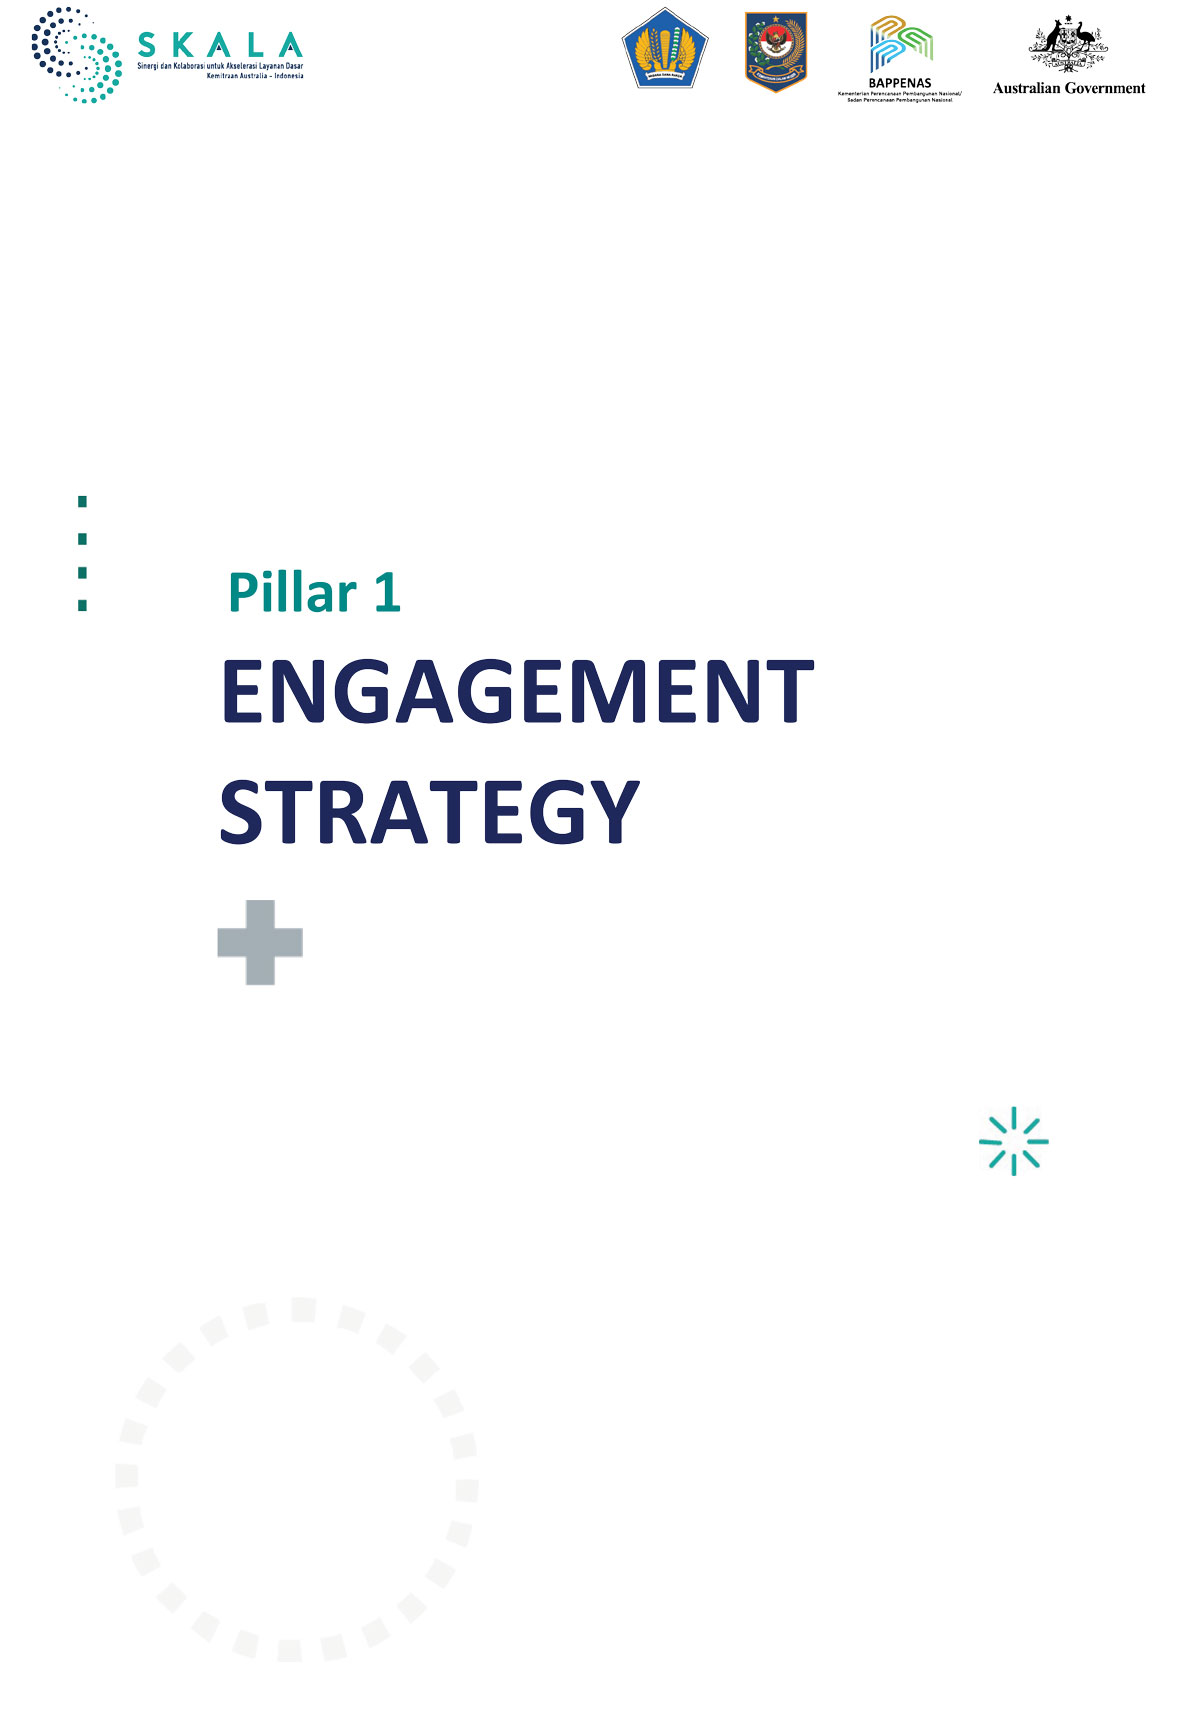 Pillar 1 Engagement Strategy